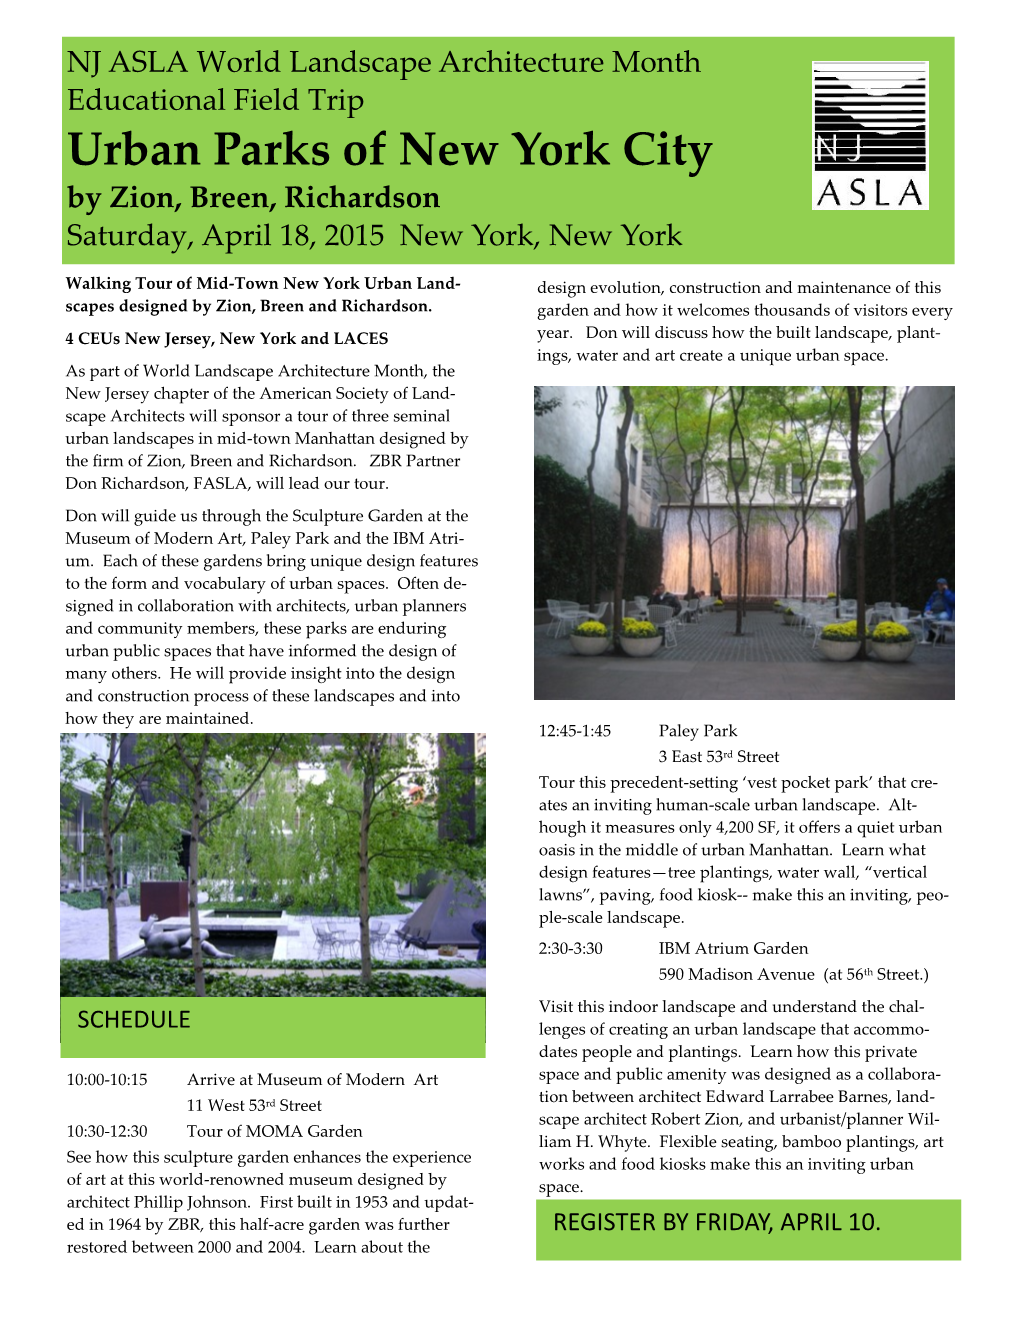 Urban Parks of New York City by Zion, Breen, Richardson Saturday, April 18, 2015 New York, New York